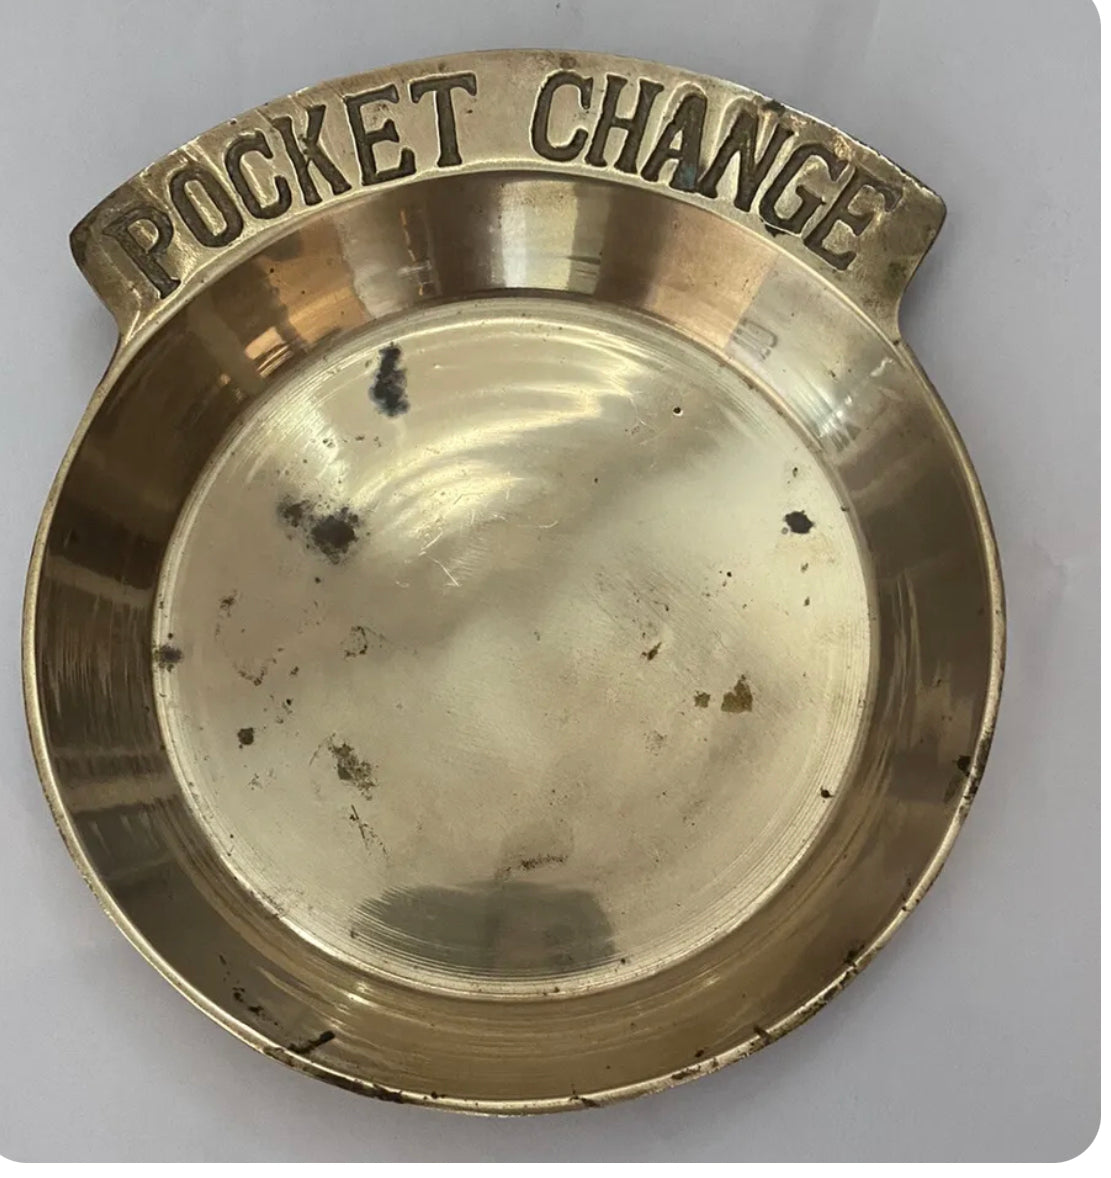 Pocket Change Dish